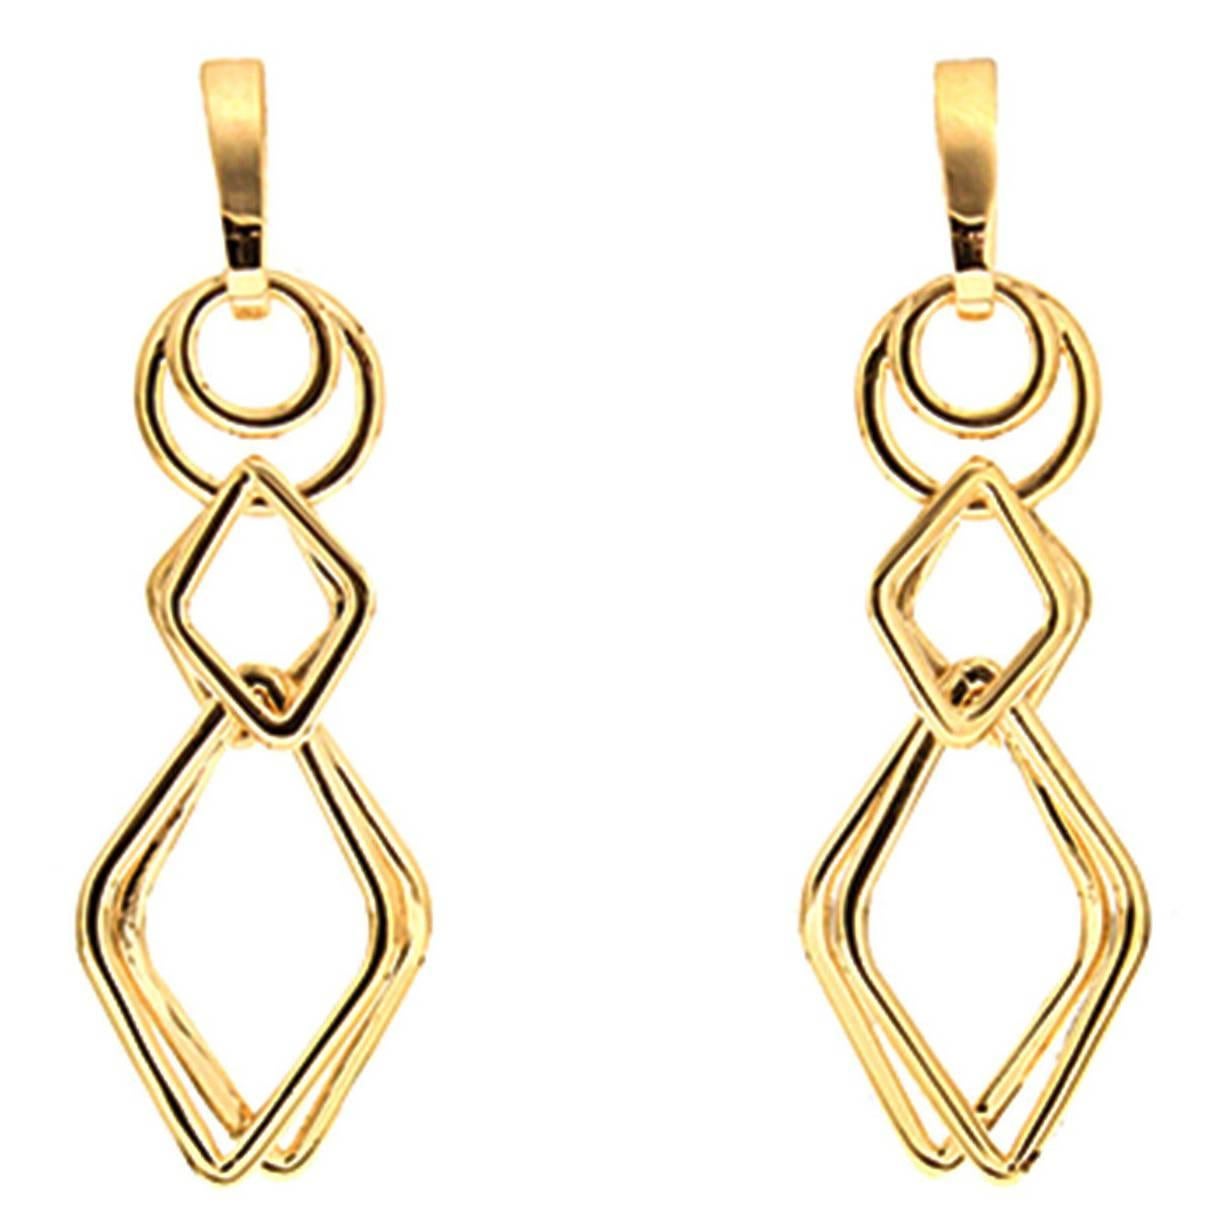 Valentin Magro Dangling Double Geometric Links Gold Earrings